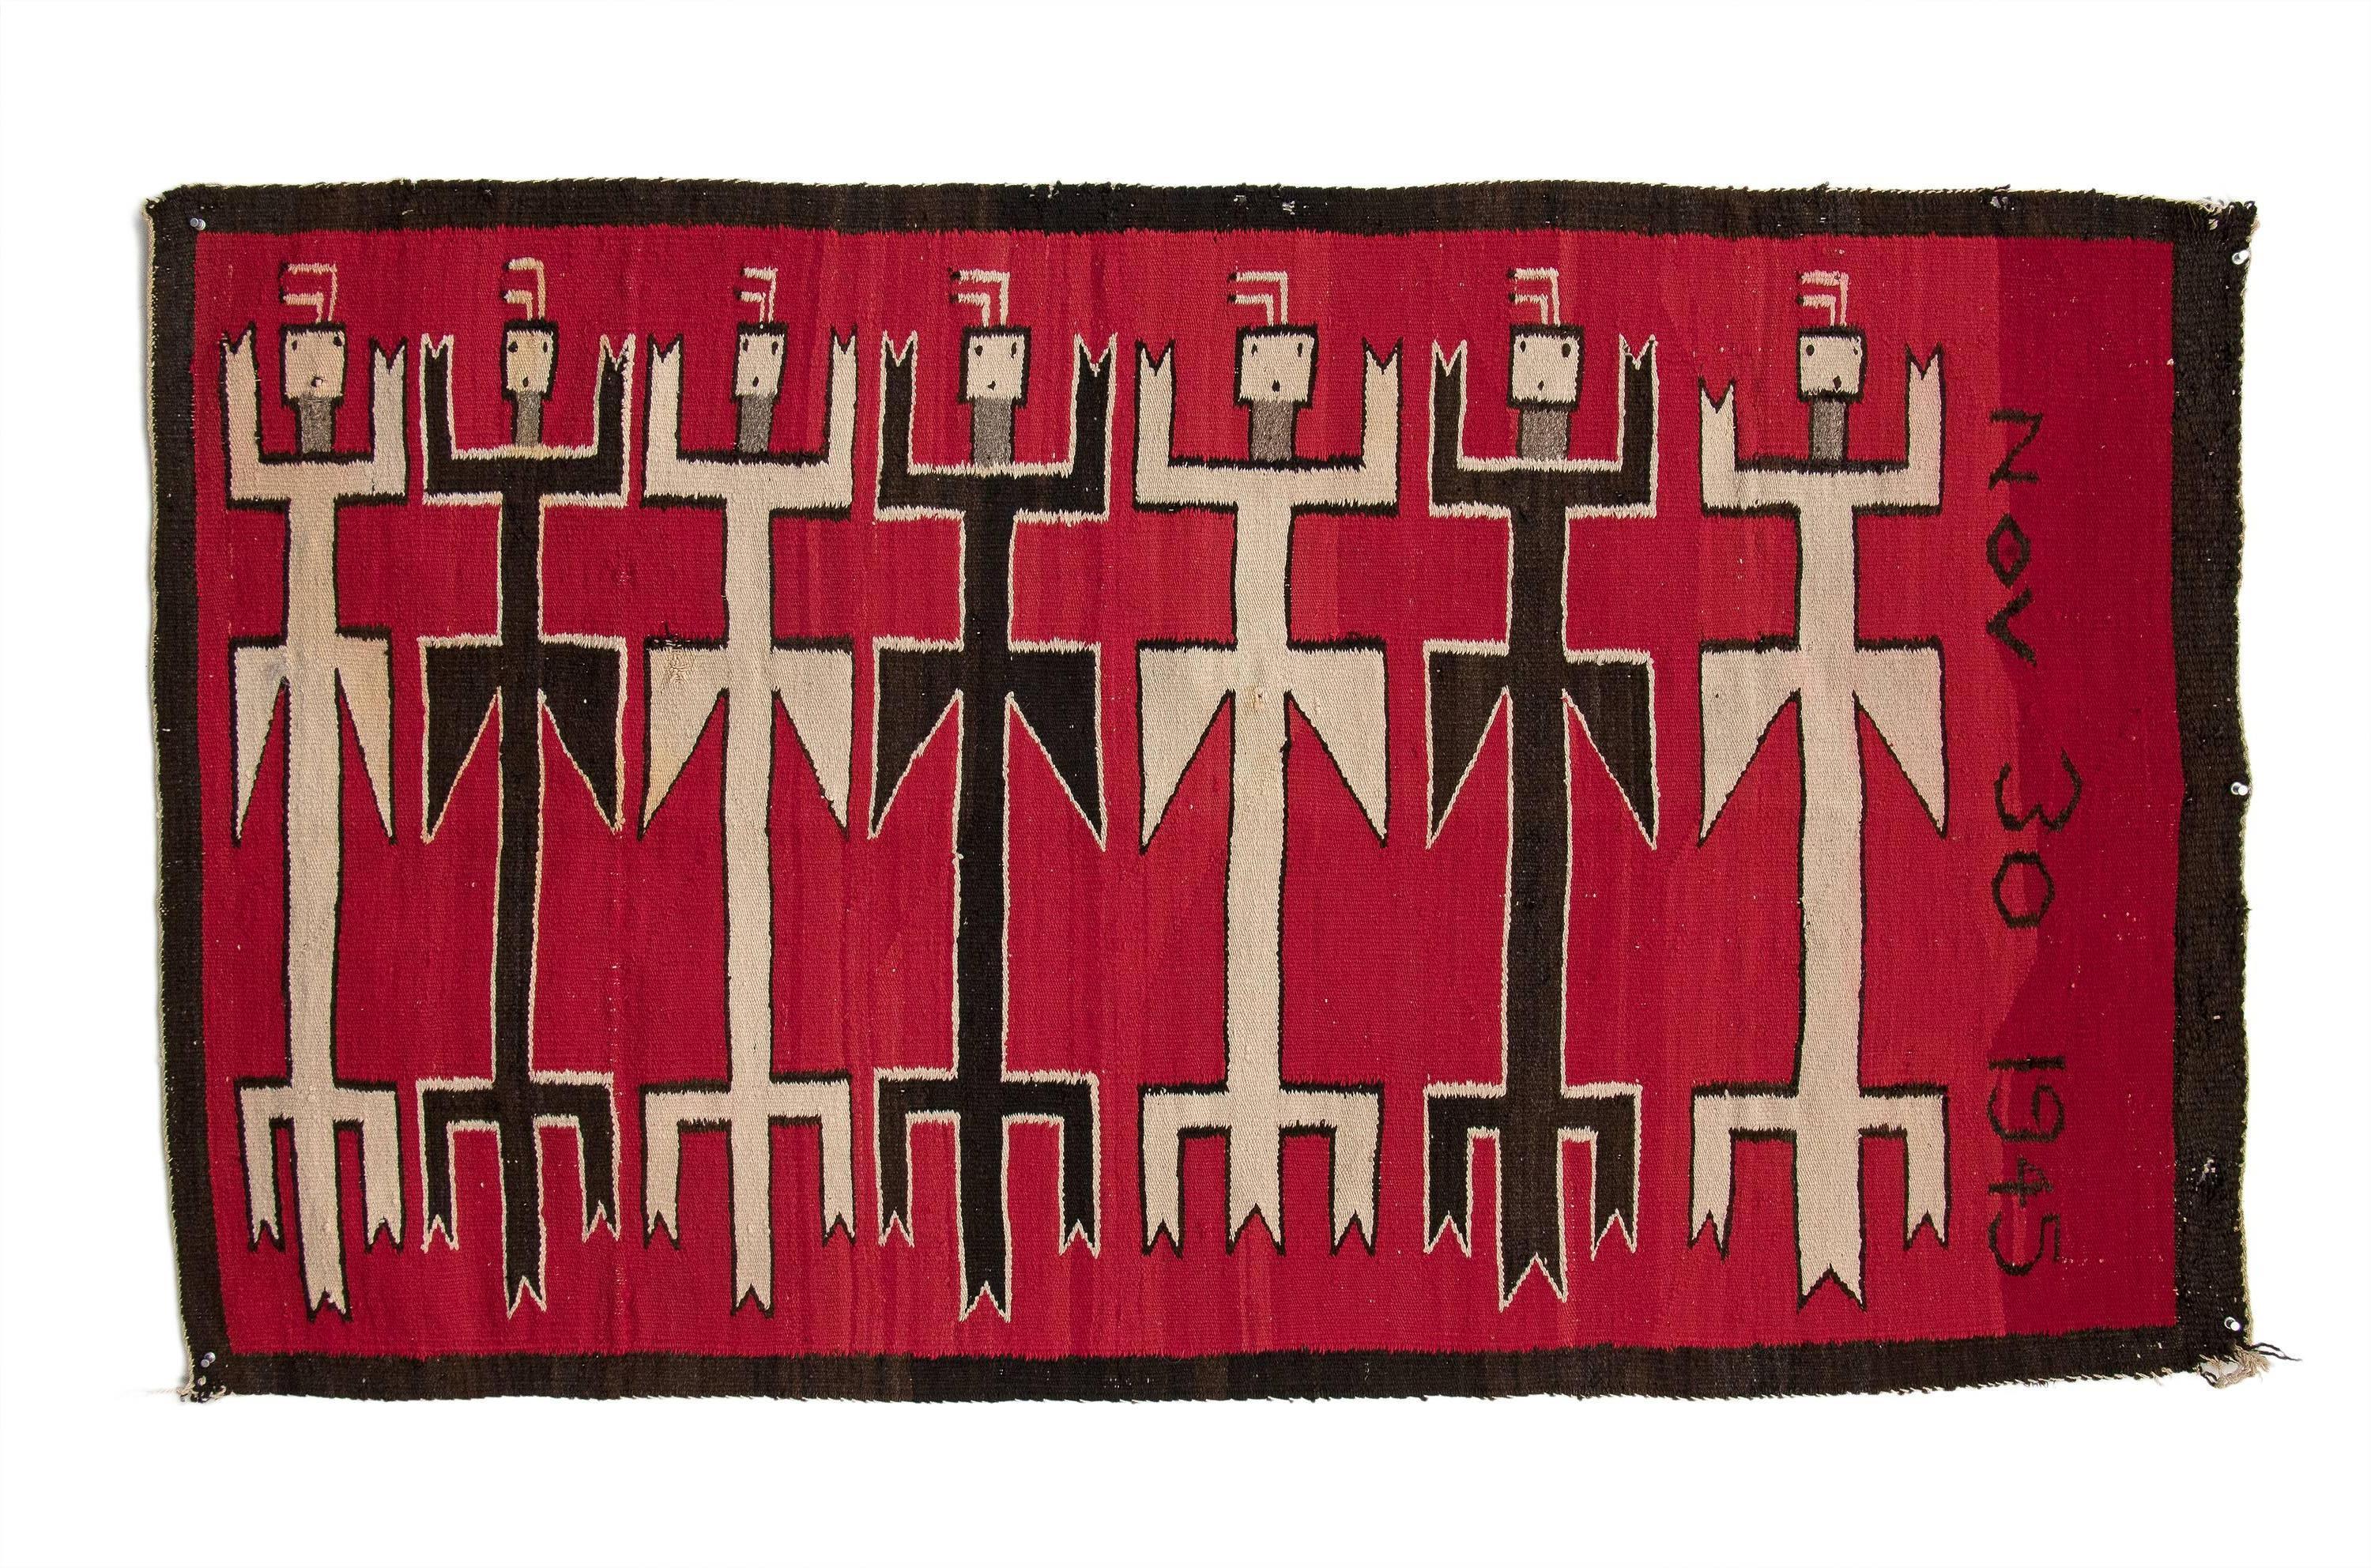 Vintage 1940s Navajo Yei (Yeibichai) area rug depicting eight pollinator figures as well as the date 